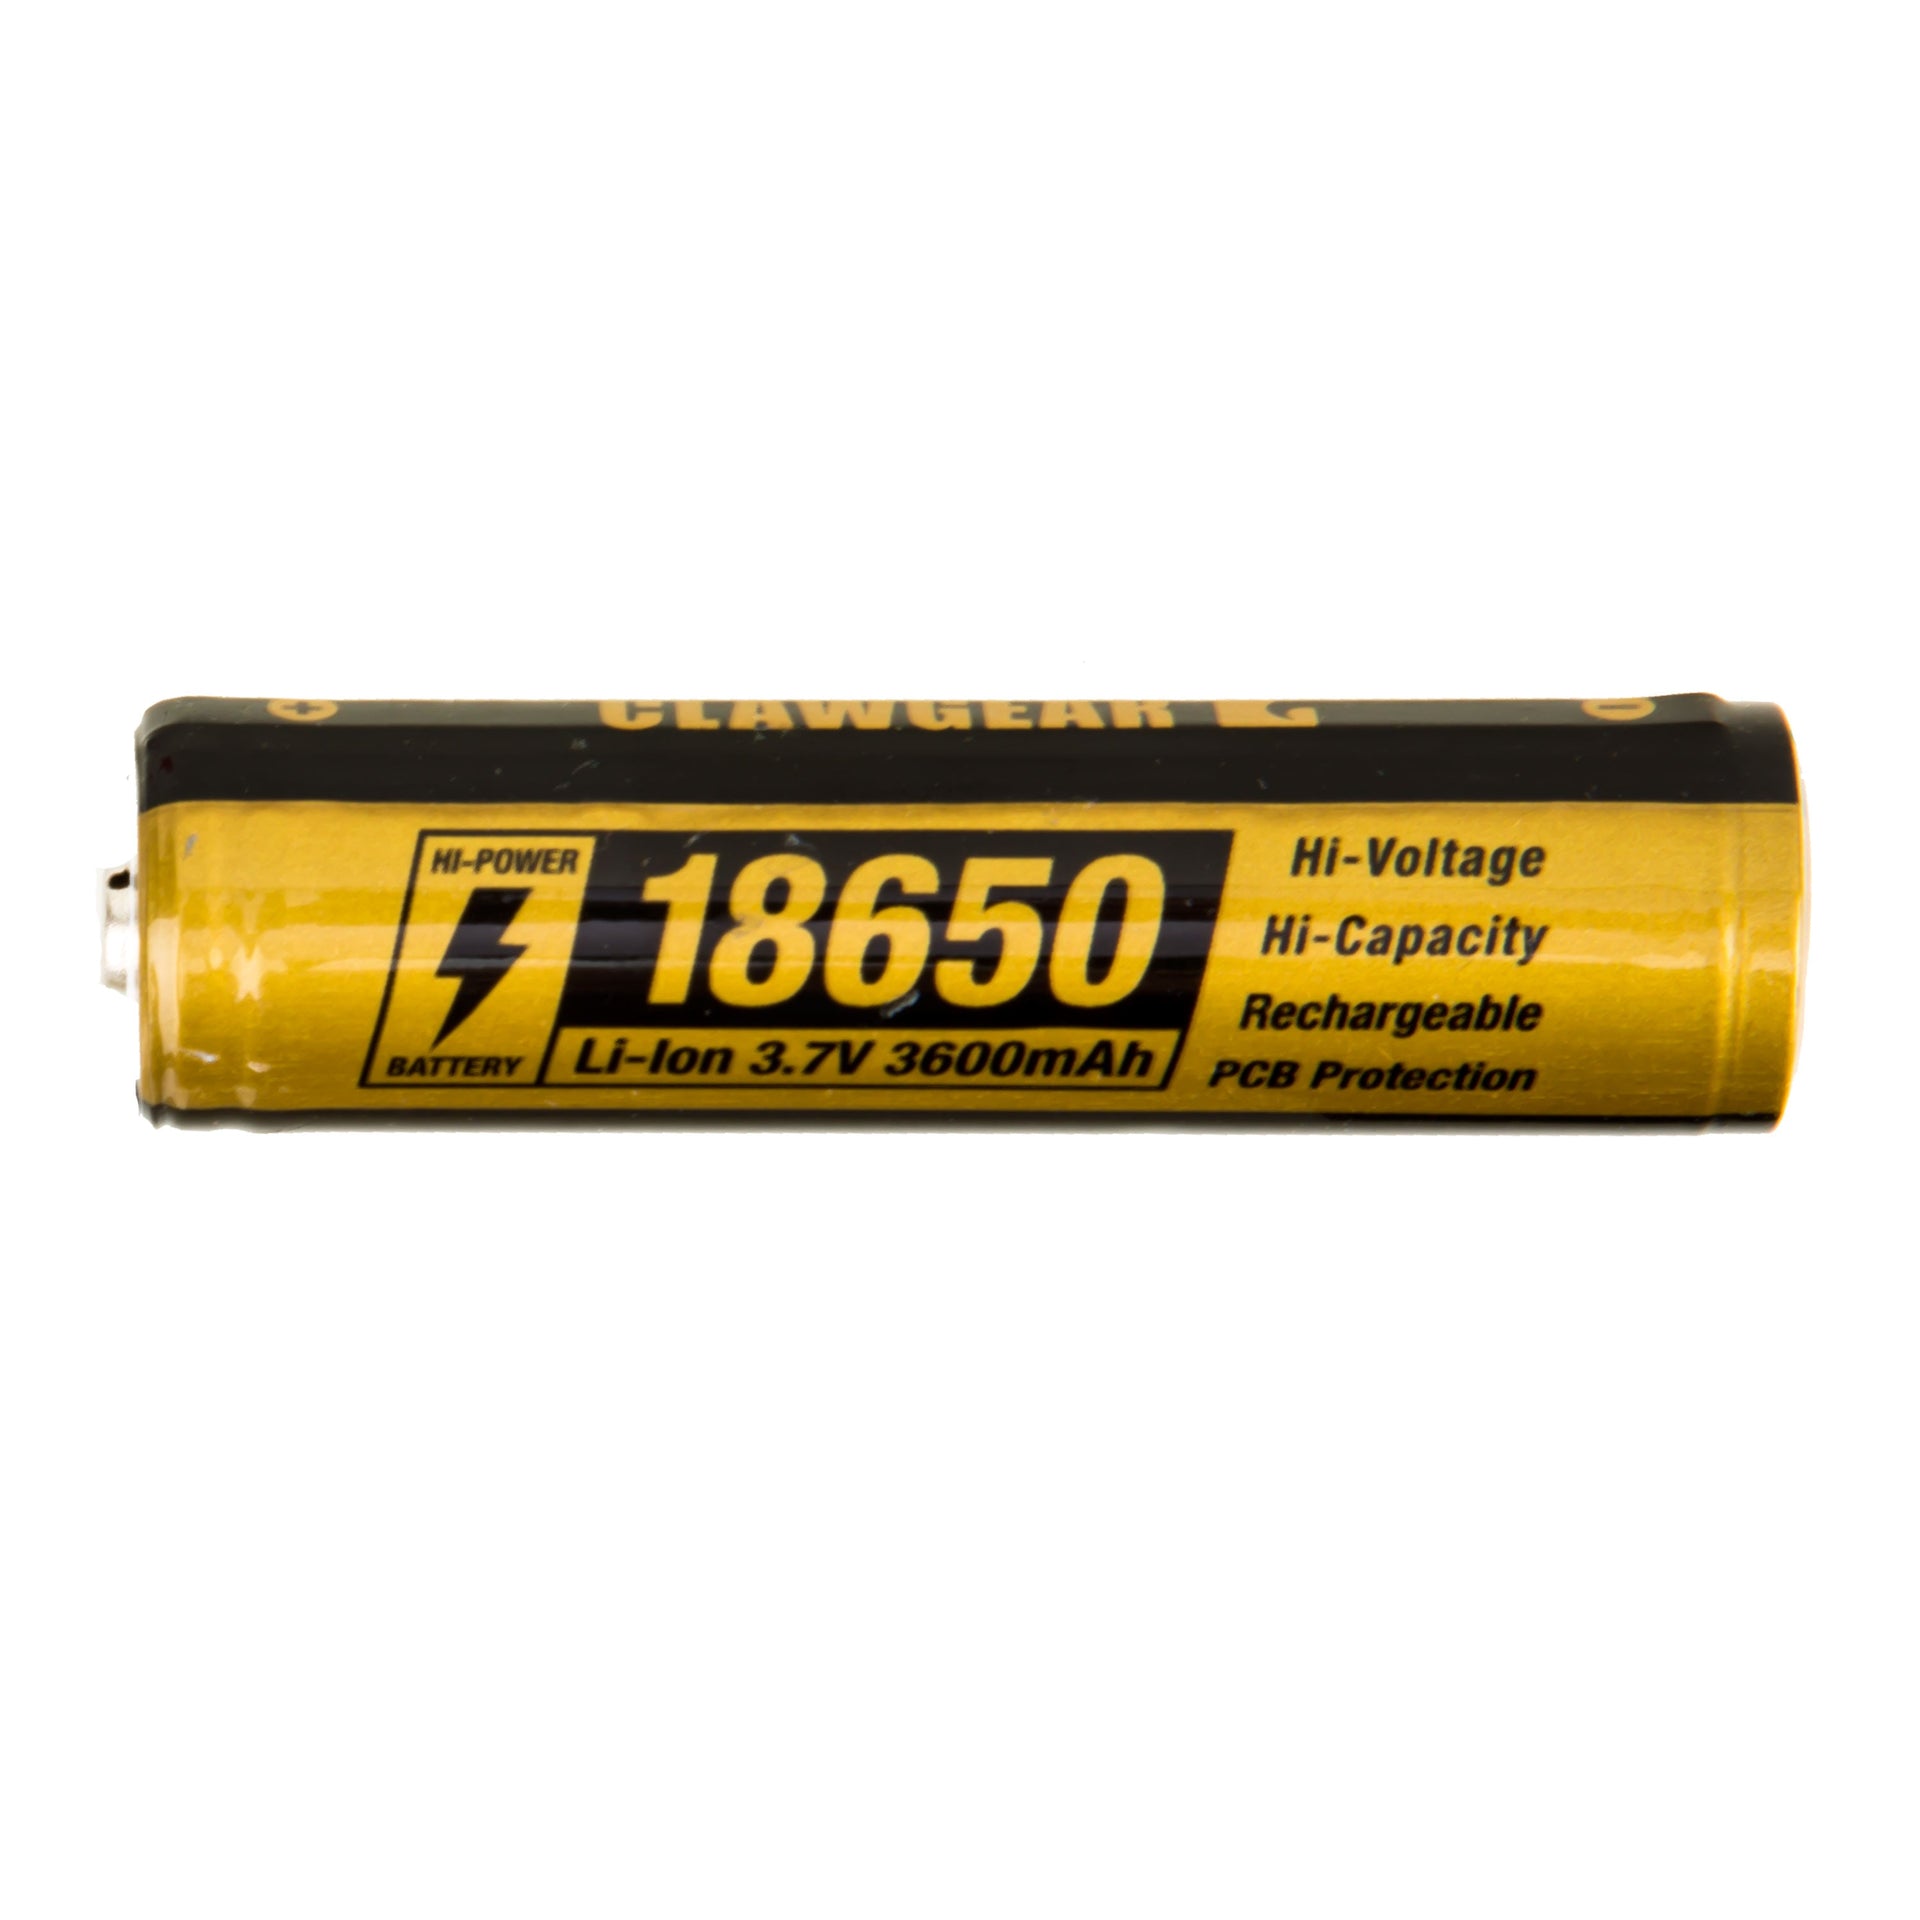 Rechargeable Battery 18650 3.7V 3600mAh